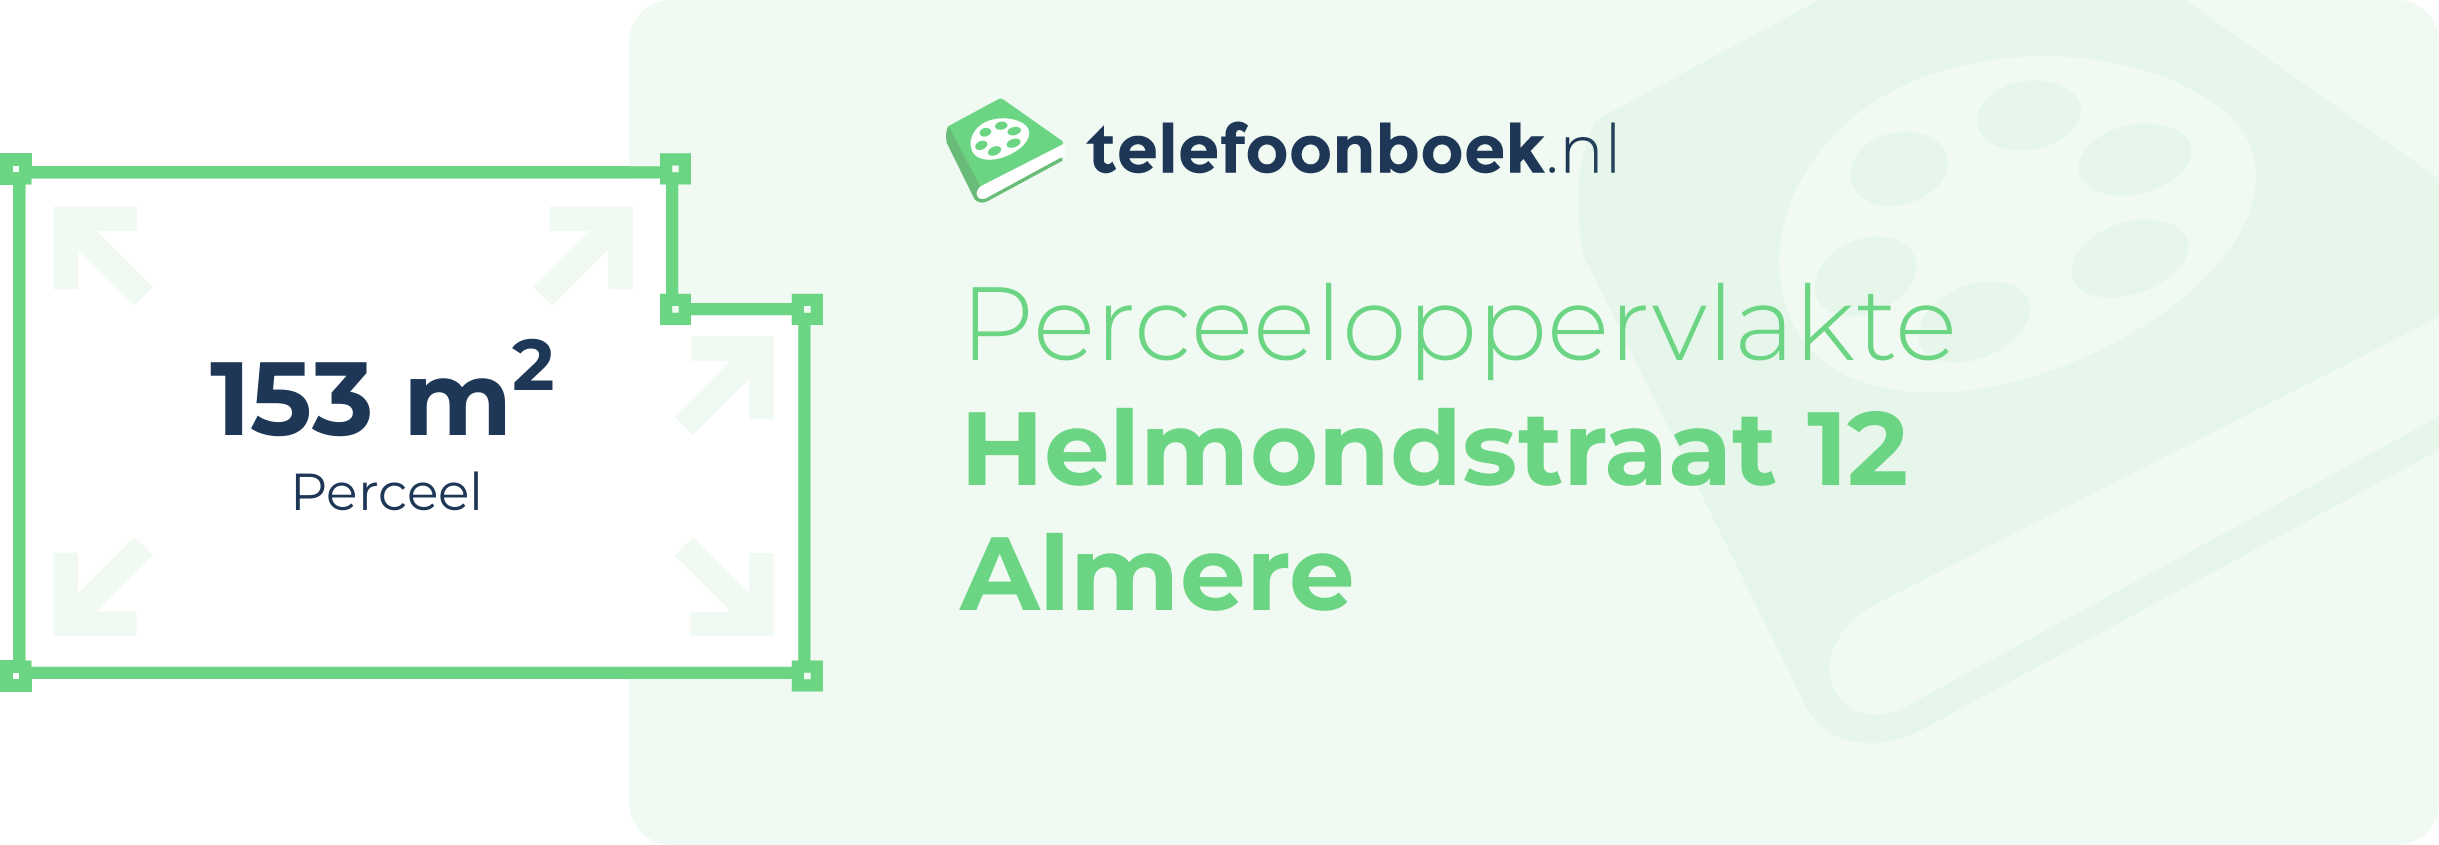 Perceeloppervlakte Helmondstraat 12 Almere